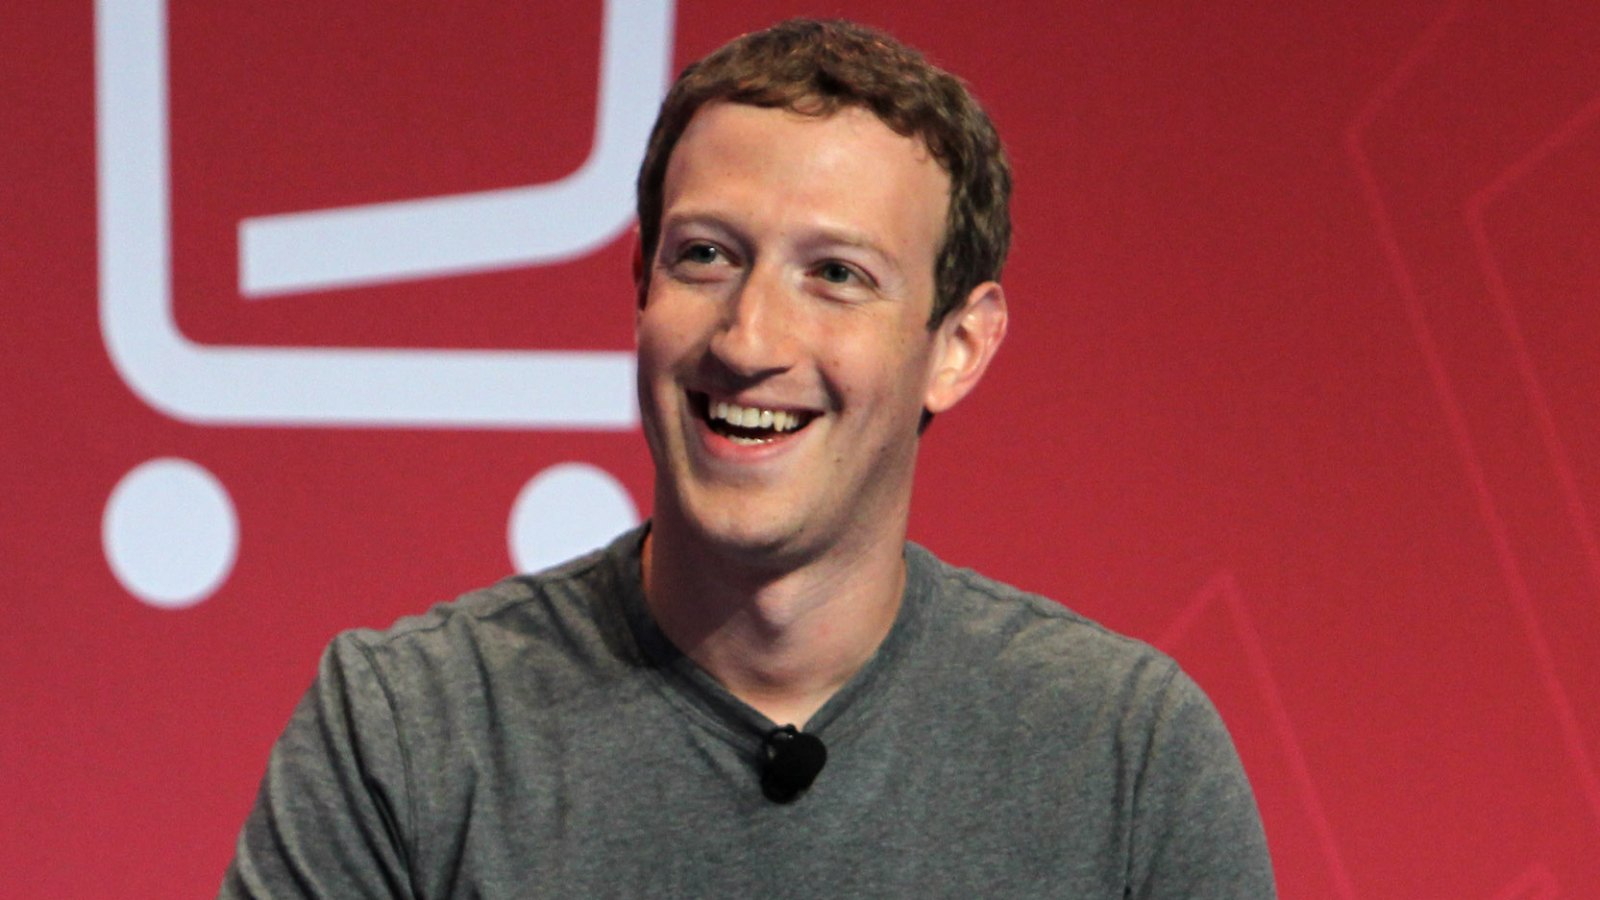 Mark Zuckerberg Shares His Go-To McDonalds Meal